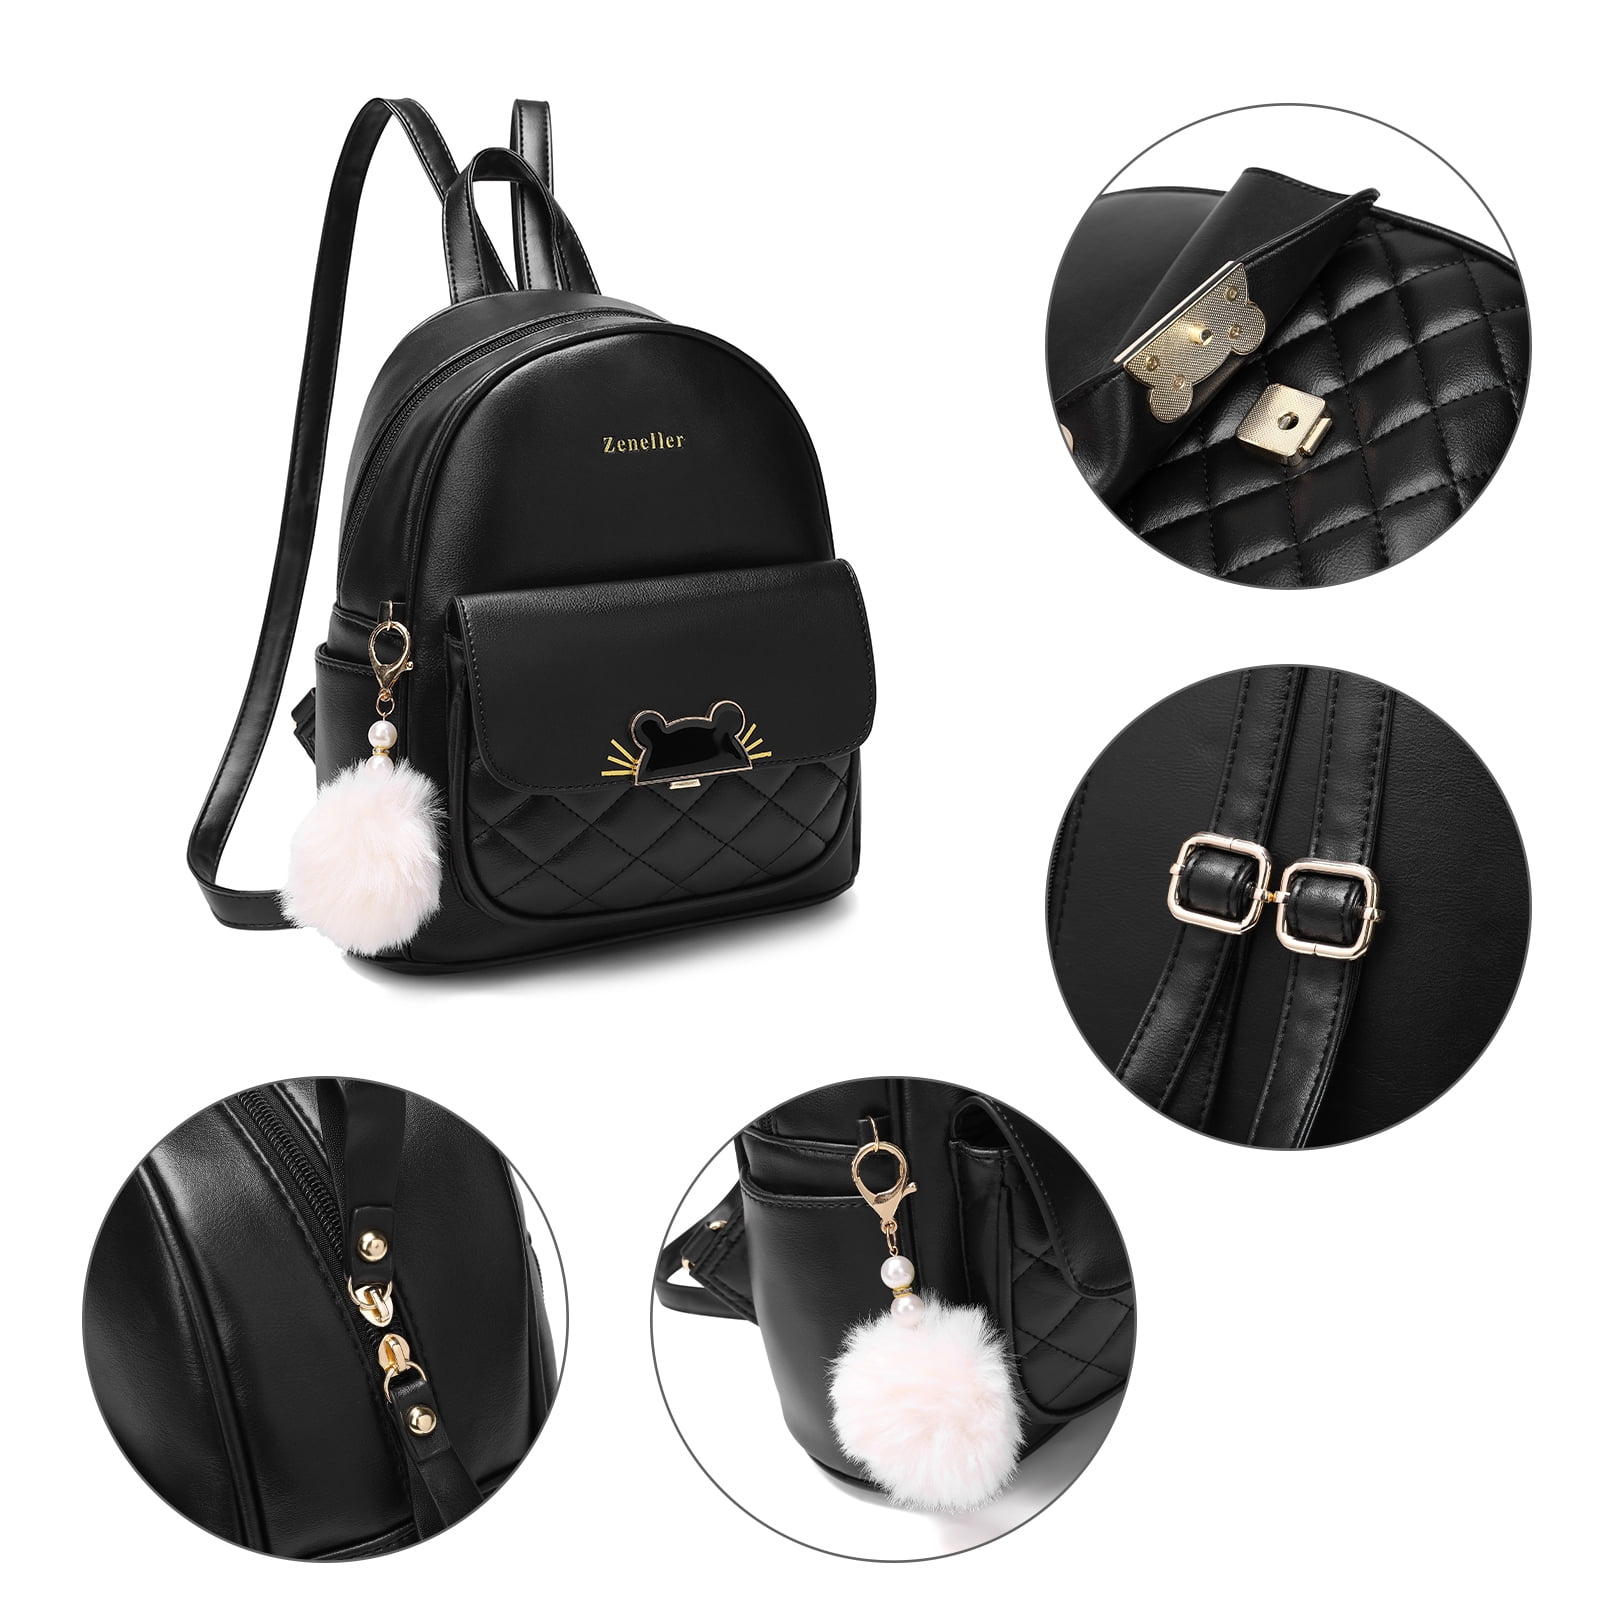 Cheruty Mini Backpack Women Leather Small Backpack Purse for